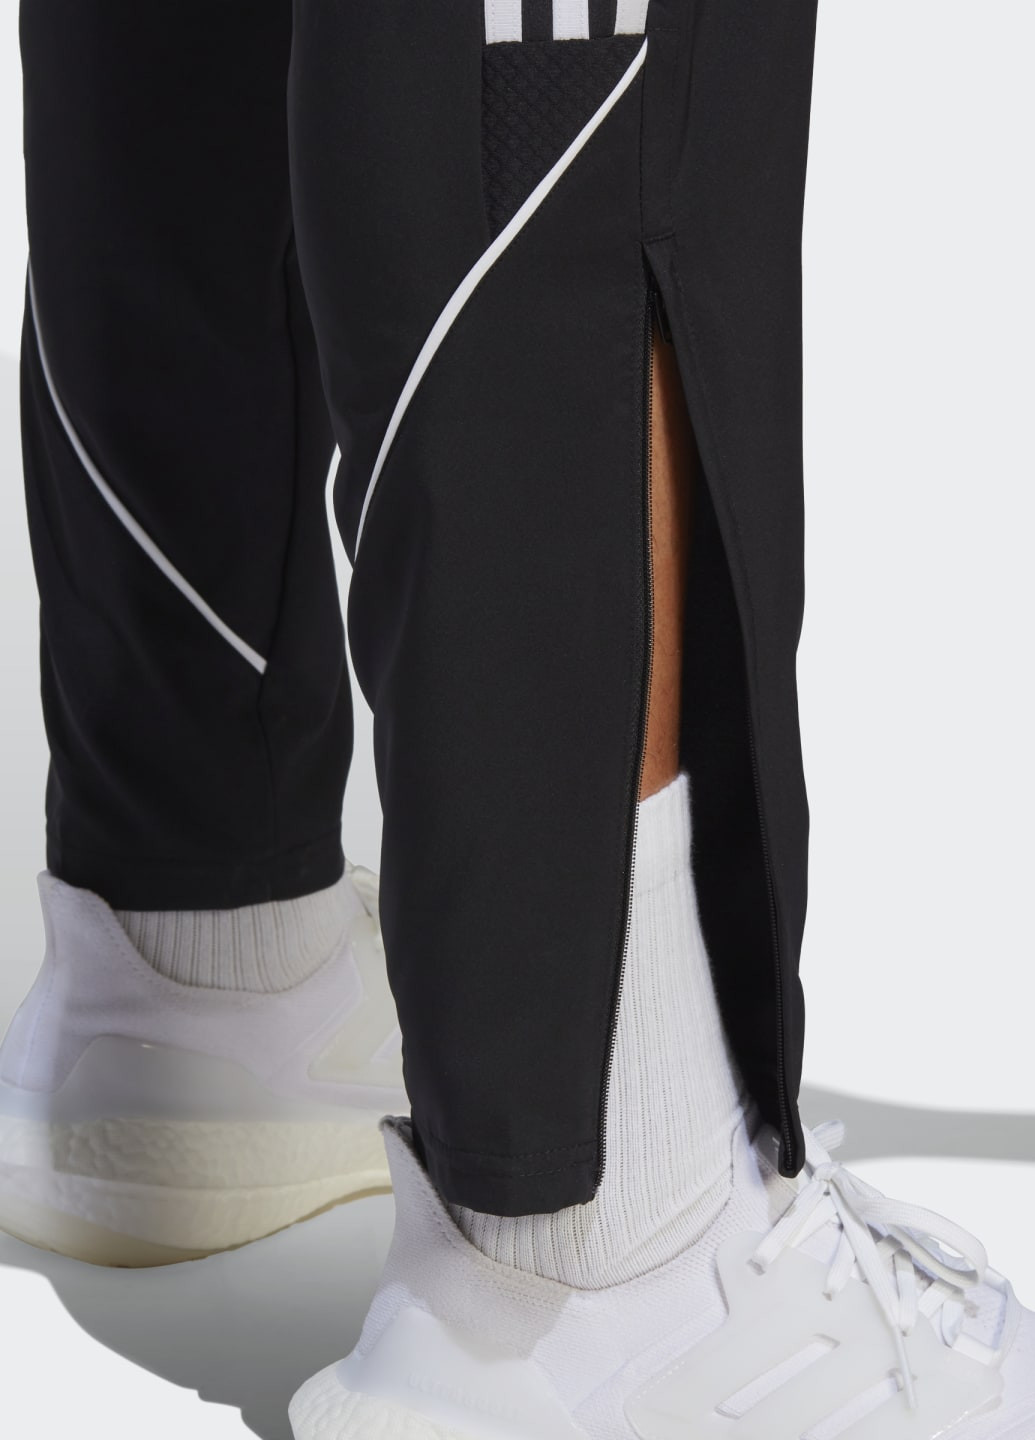 Спортивні штани Tiro 23 League Woven adidas (260510827)